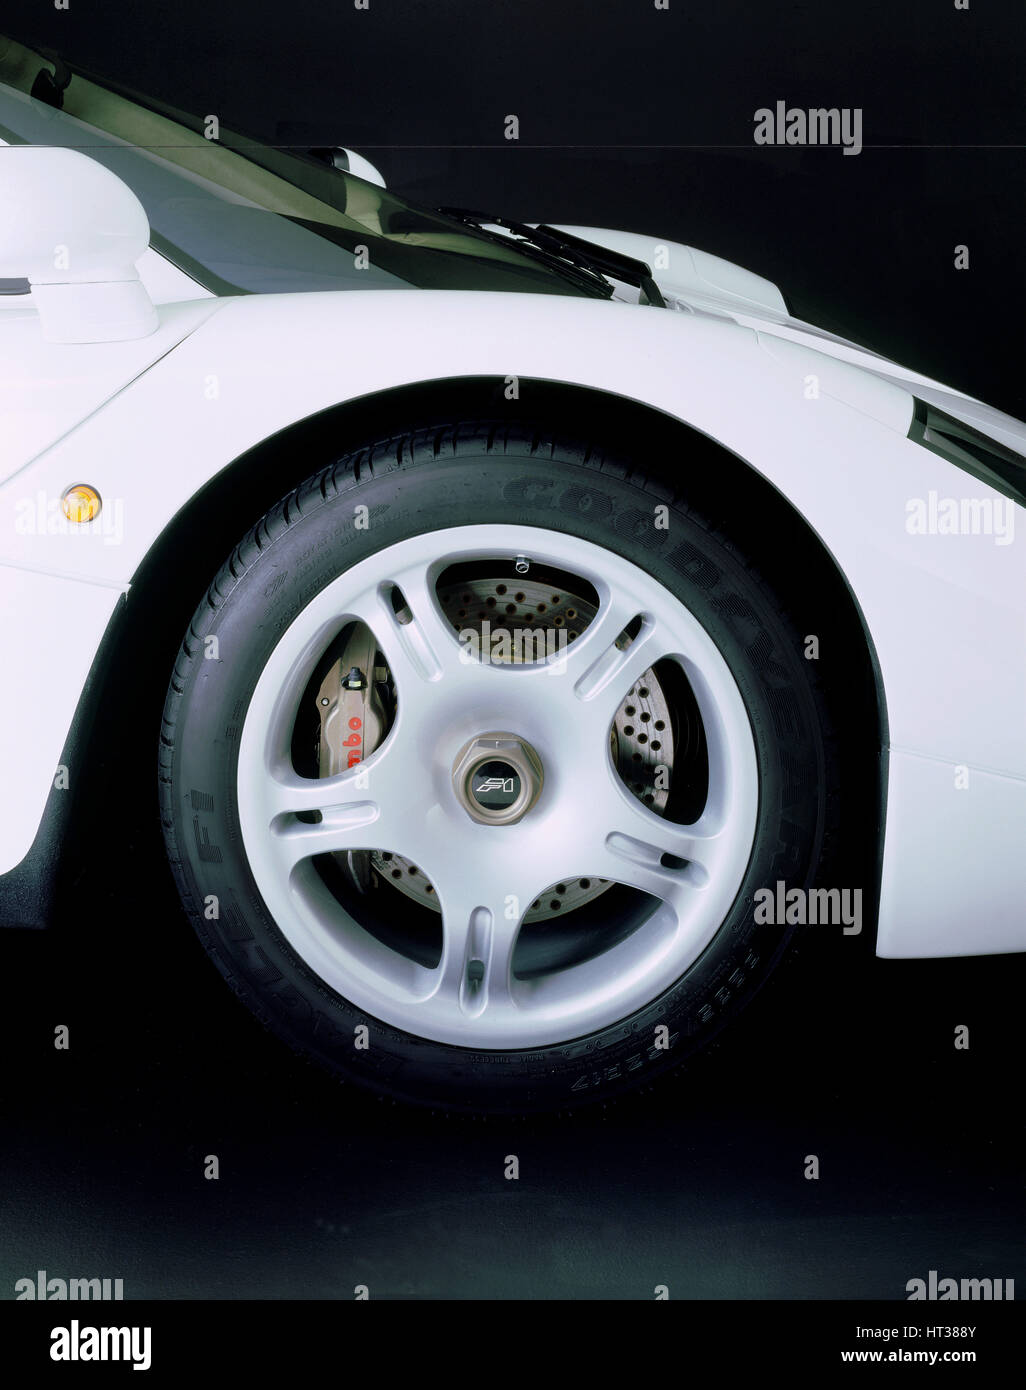 1995 McLaren F1 road car wheel. Artist: Unknown. Stock Photo